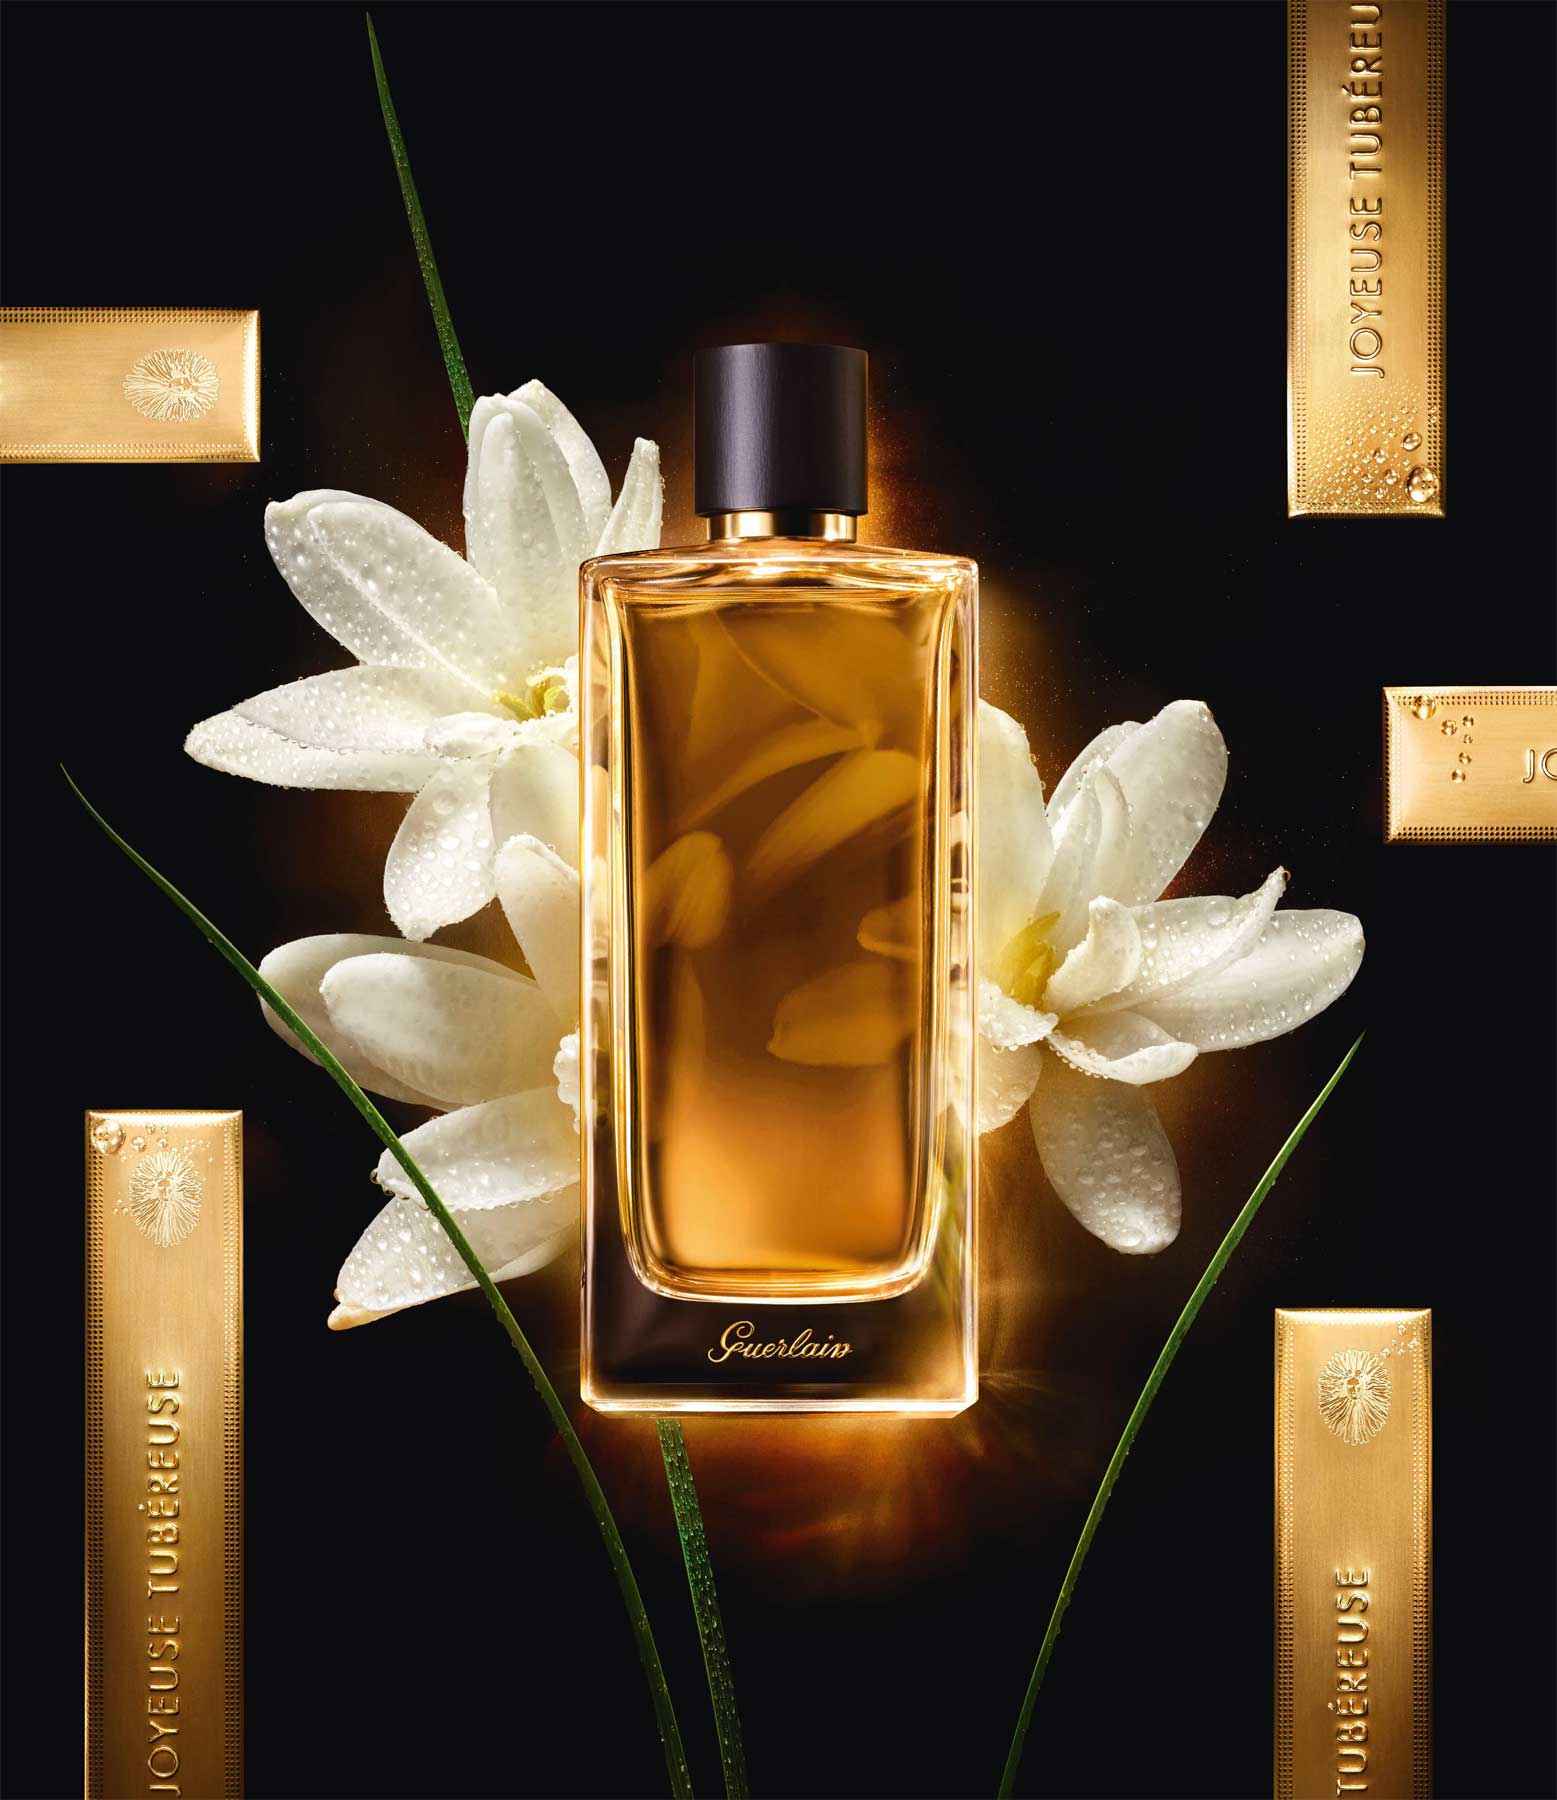 Joyeuse Tubéreuse Guerlain perfume - a new fragrance for women and men 2017